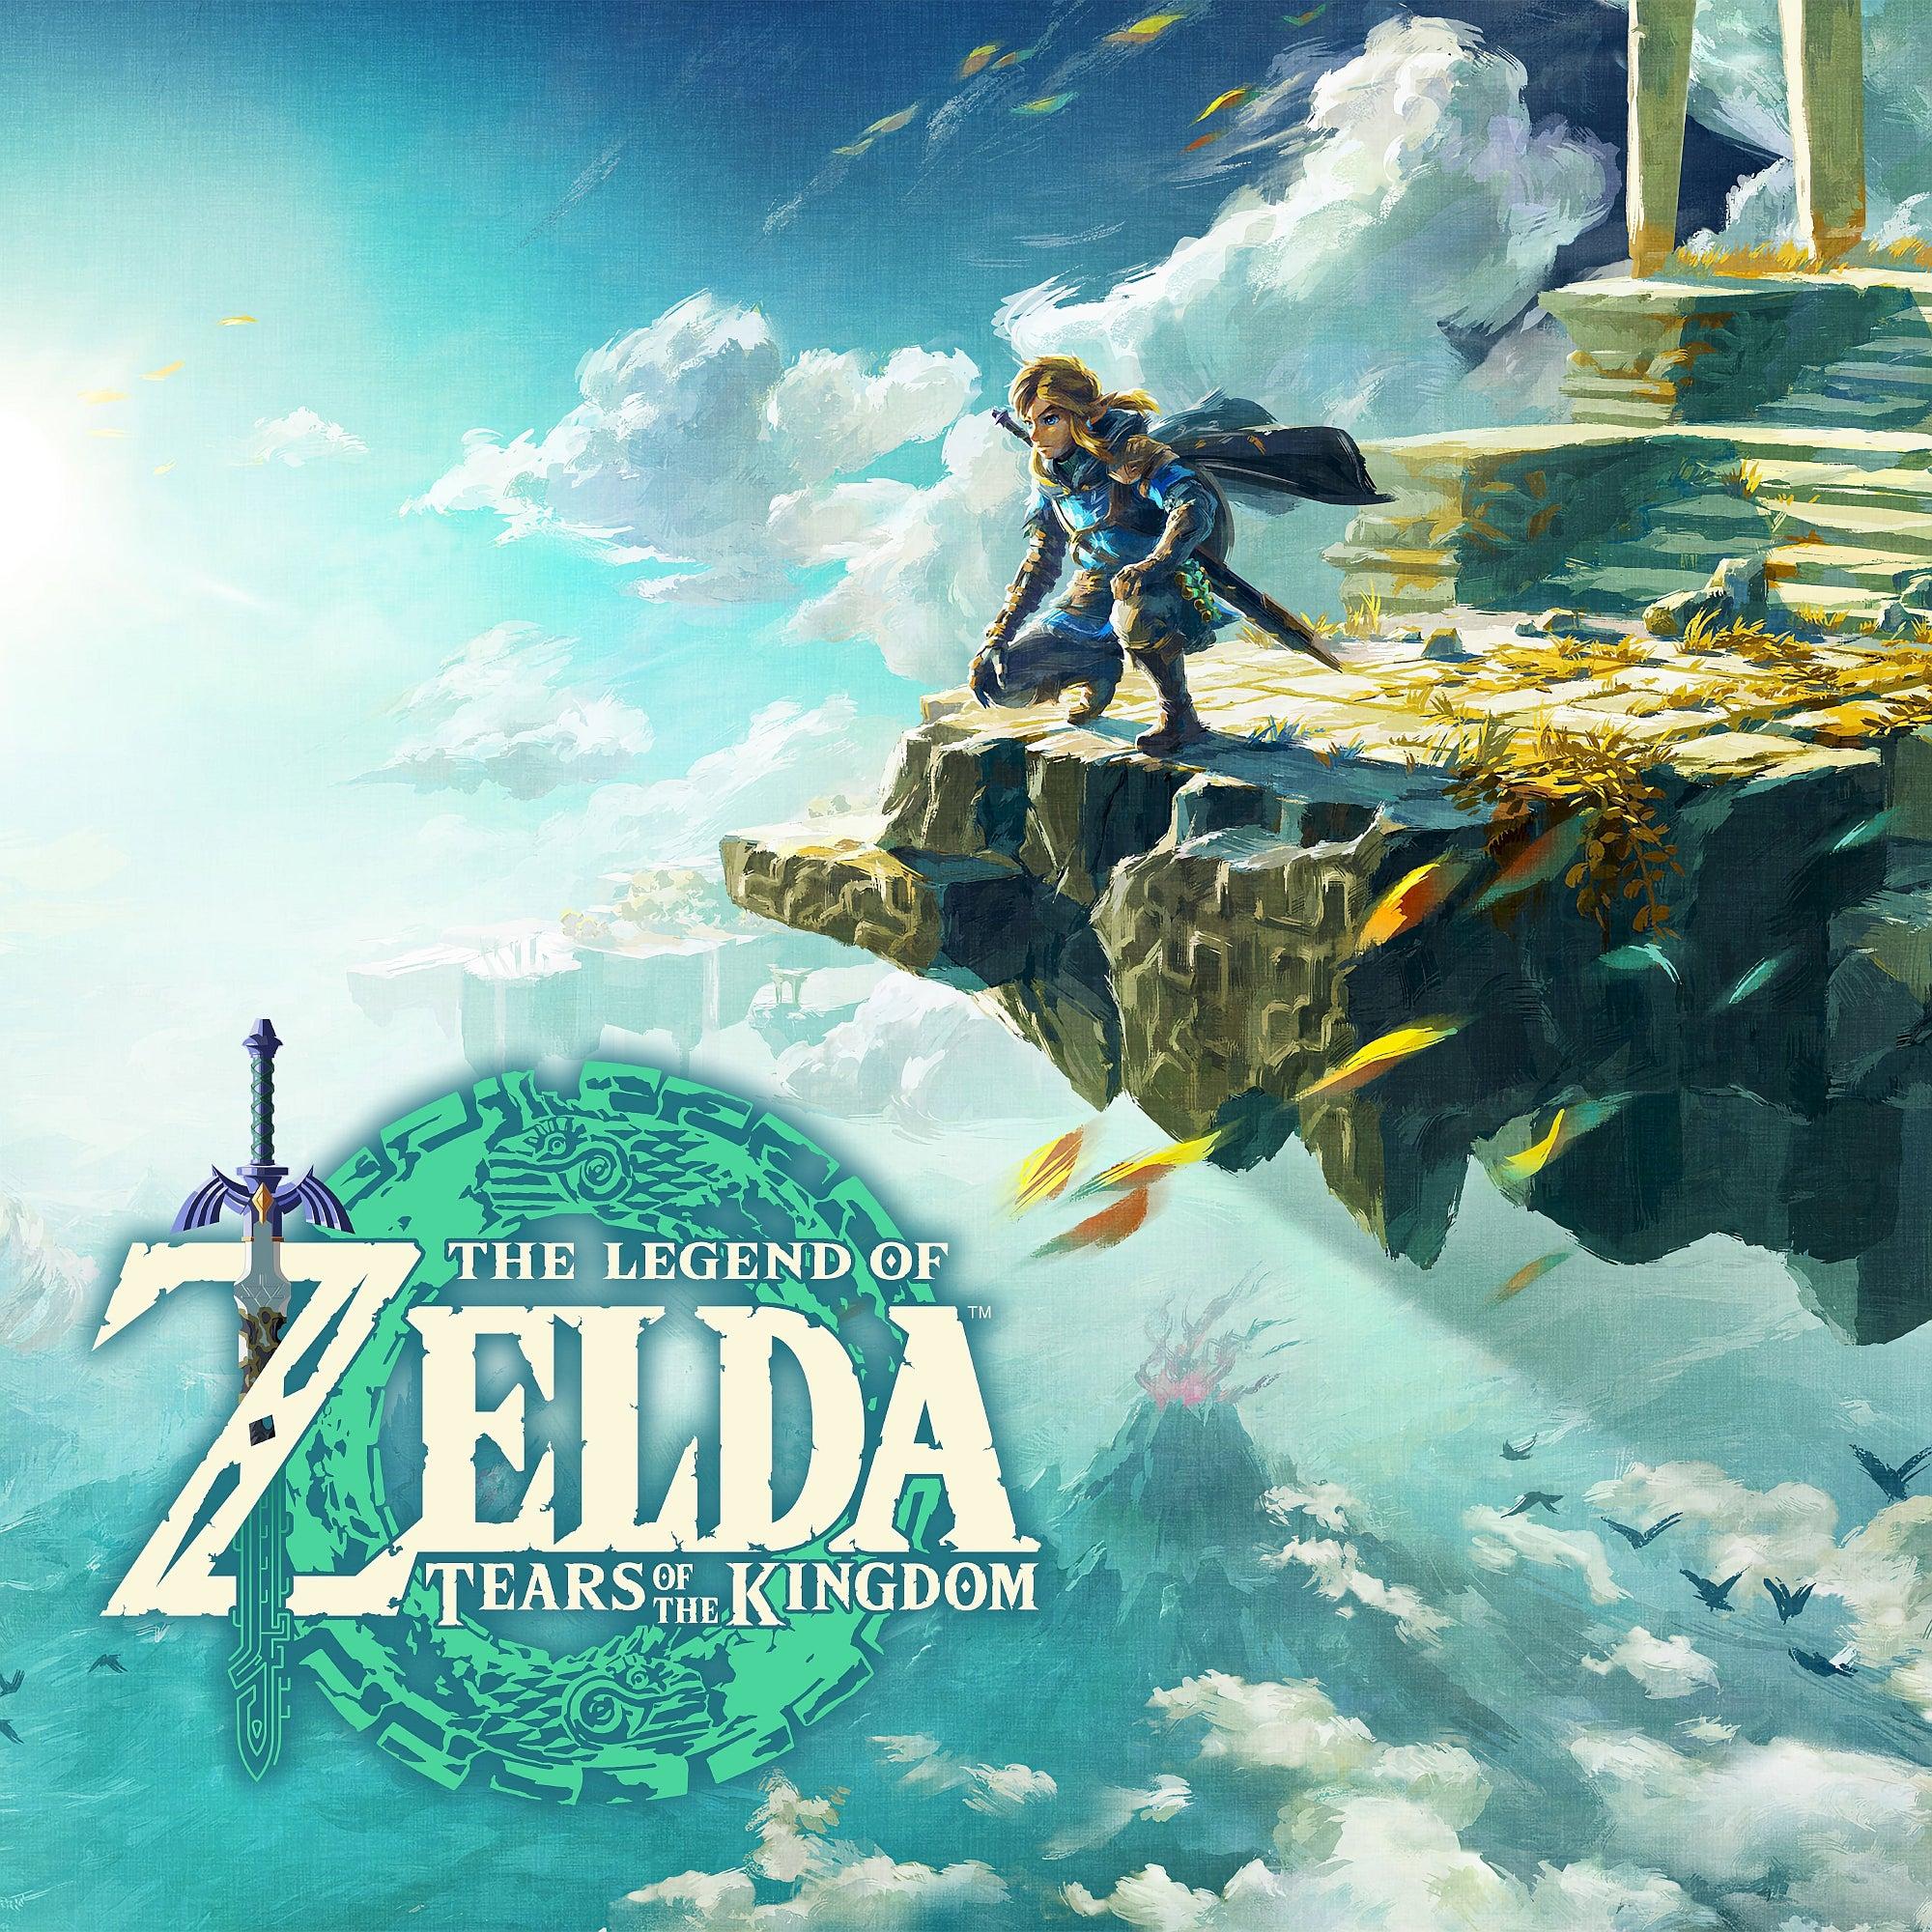 Legend of Zelda Tears of the Kingdom Trade-In Offer $50 Off